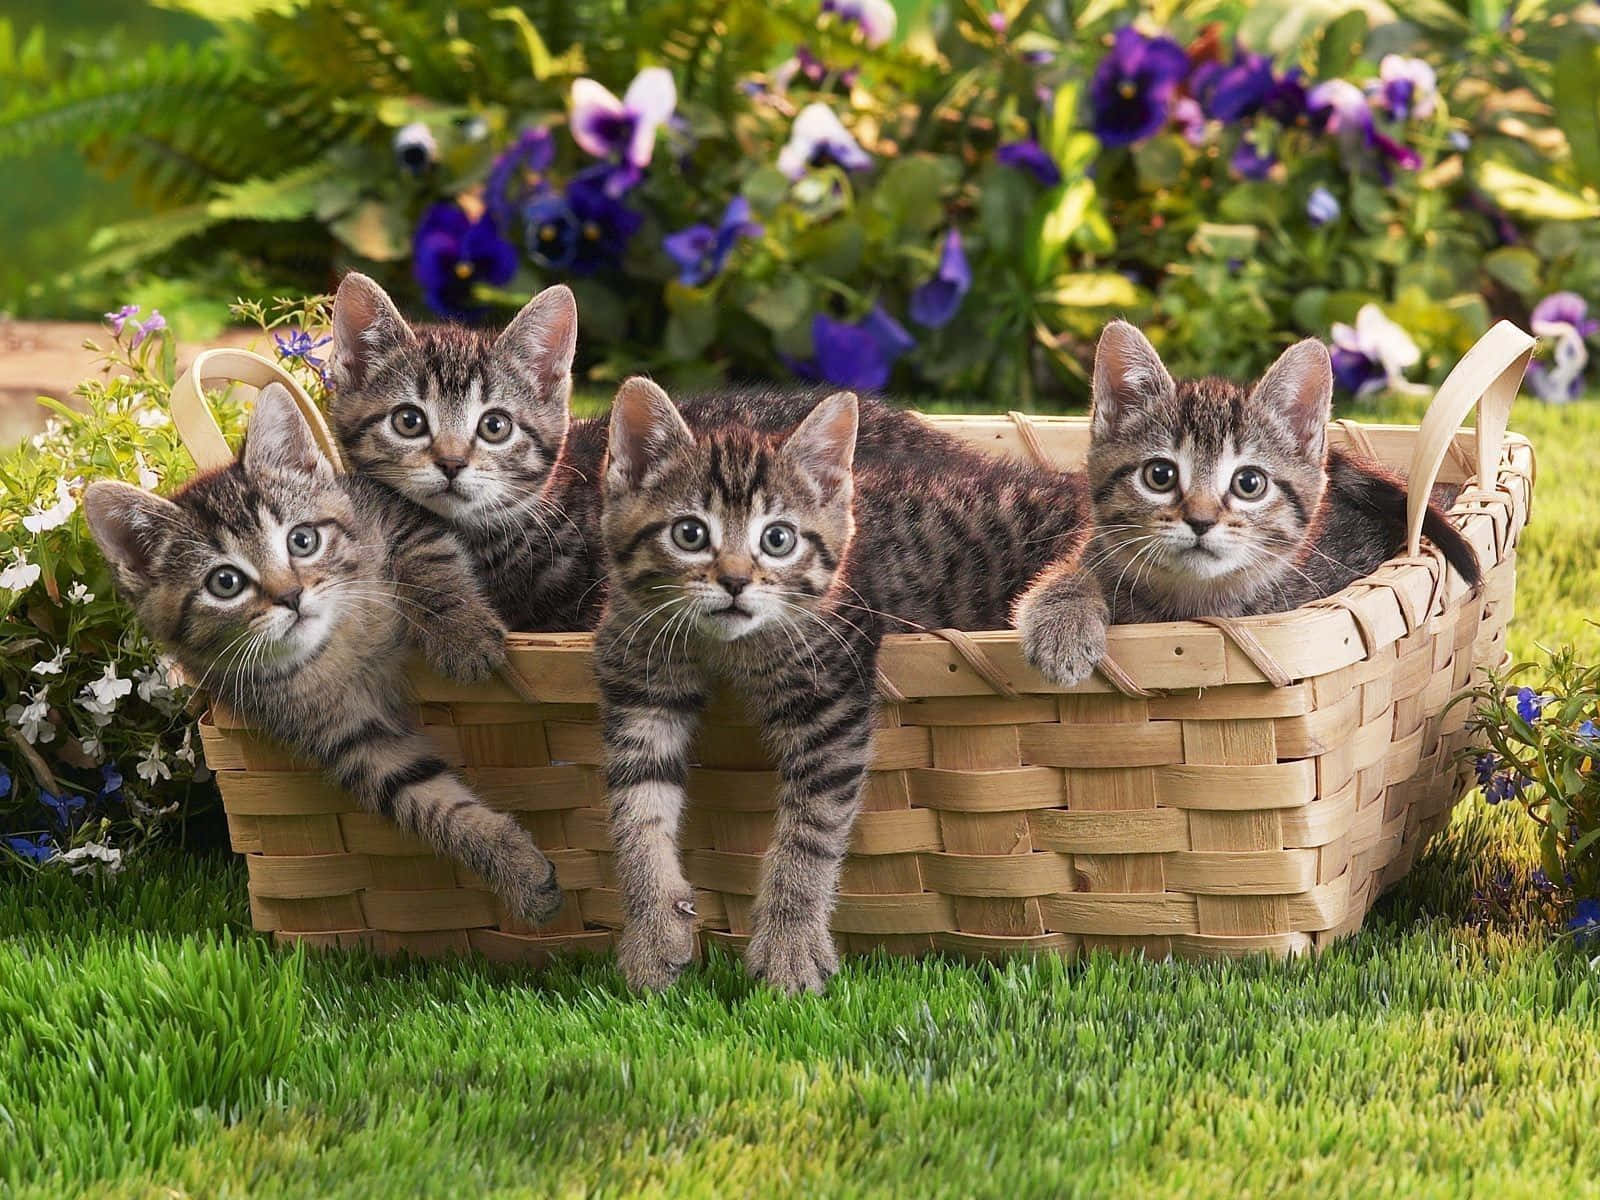 Adorable Tabby Kittens Snuggling in a Basket Wallpaper